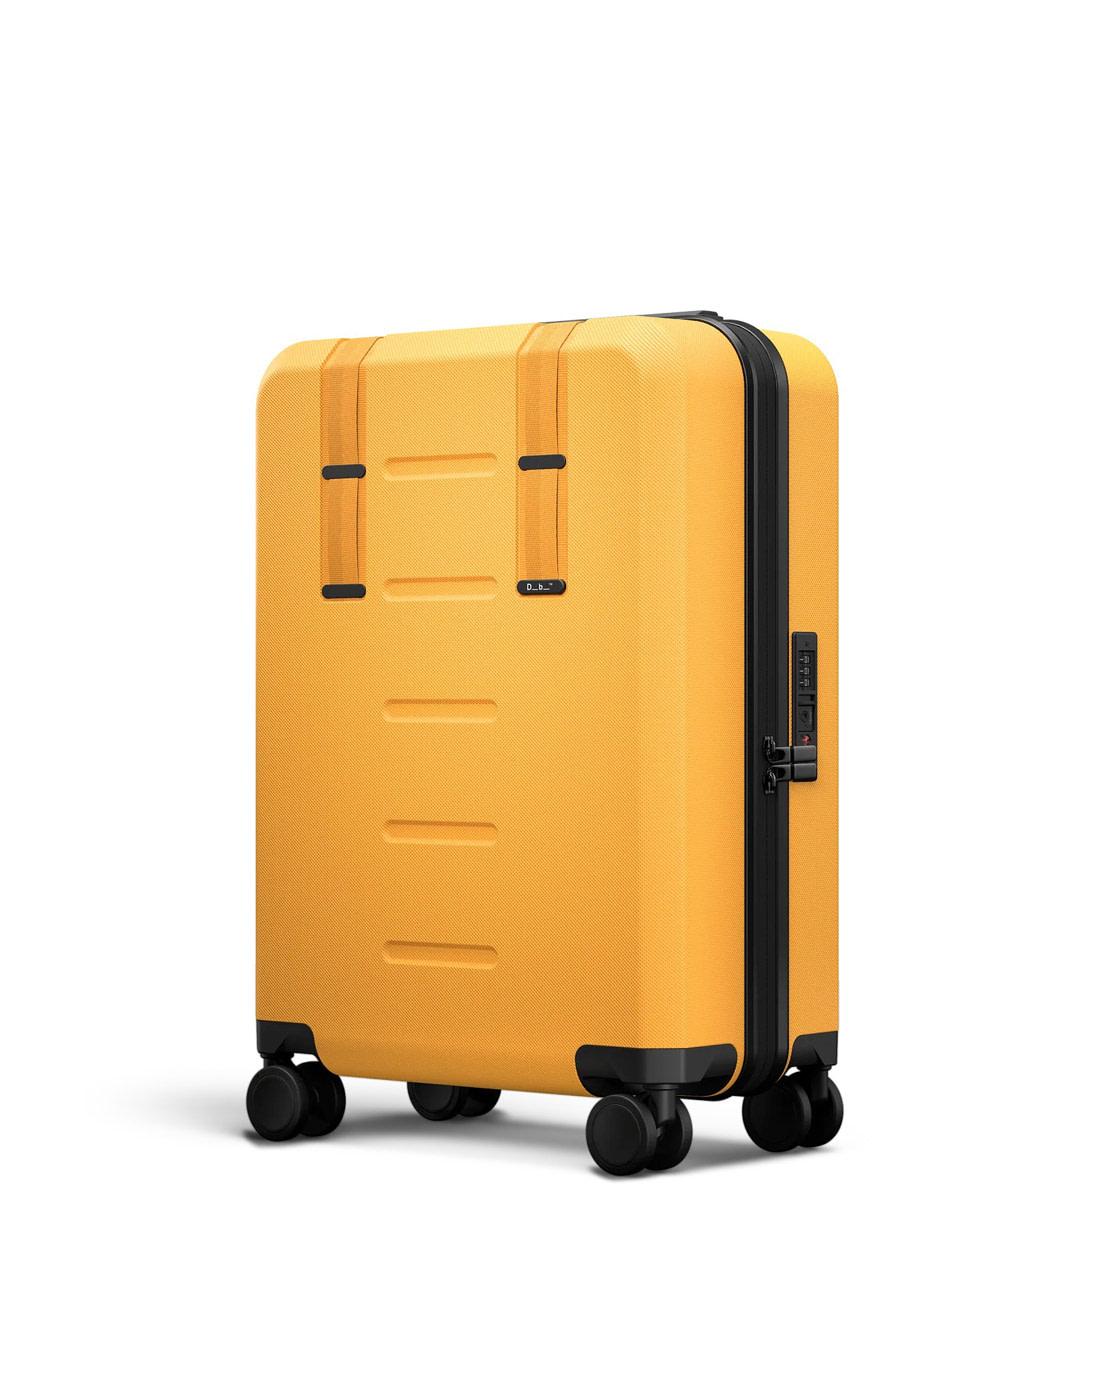 Best Lightweight Luggage Under 5lb: Avoid Overweight Baggage